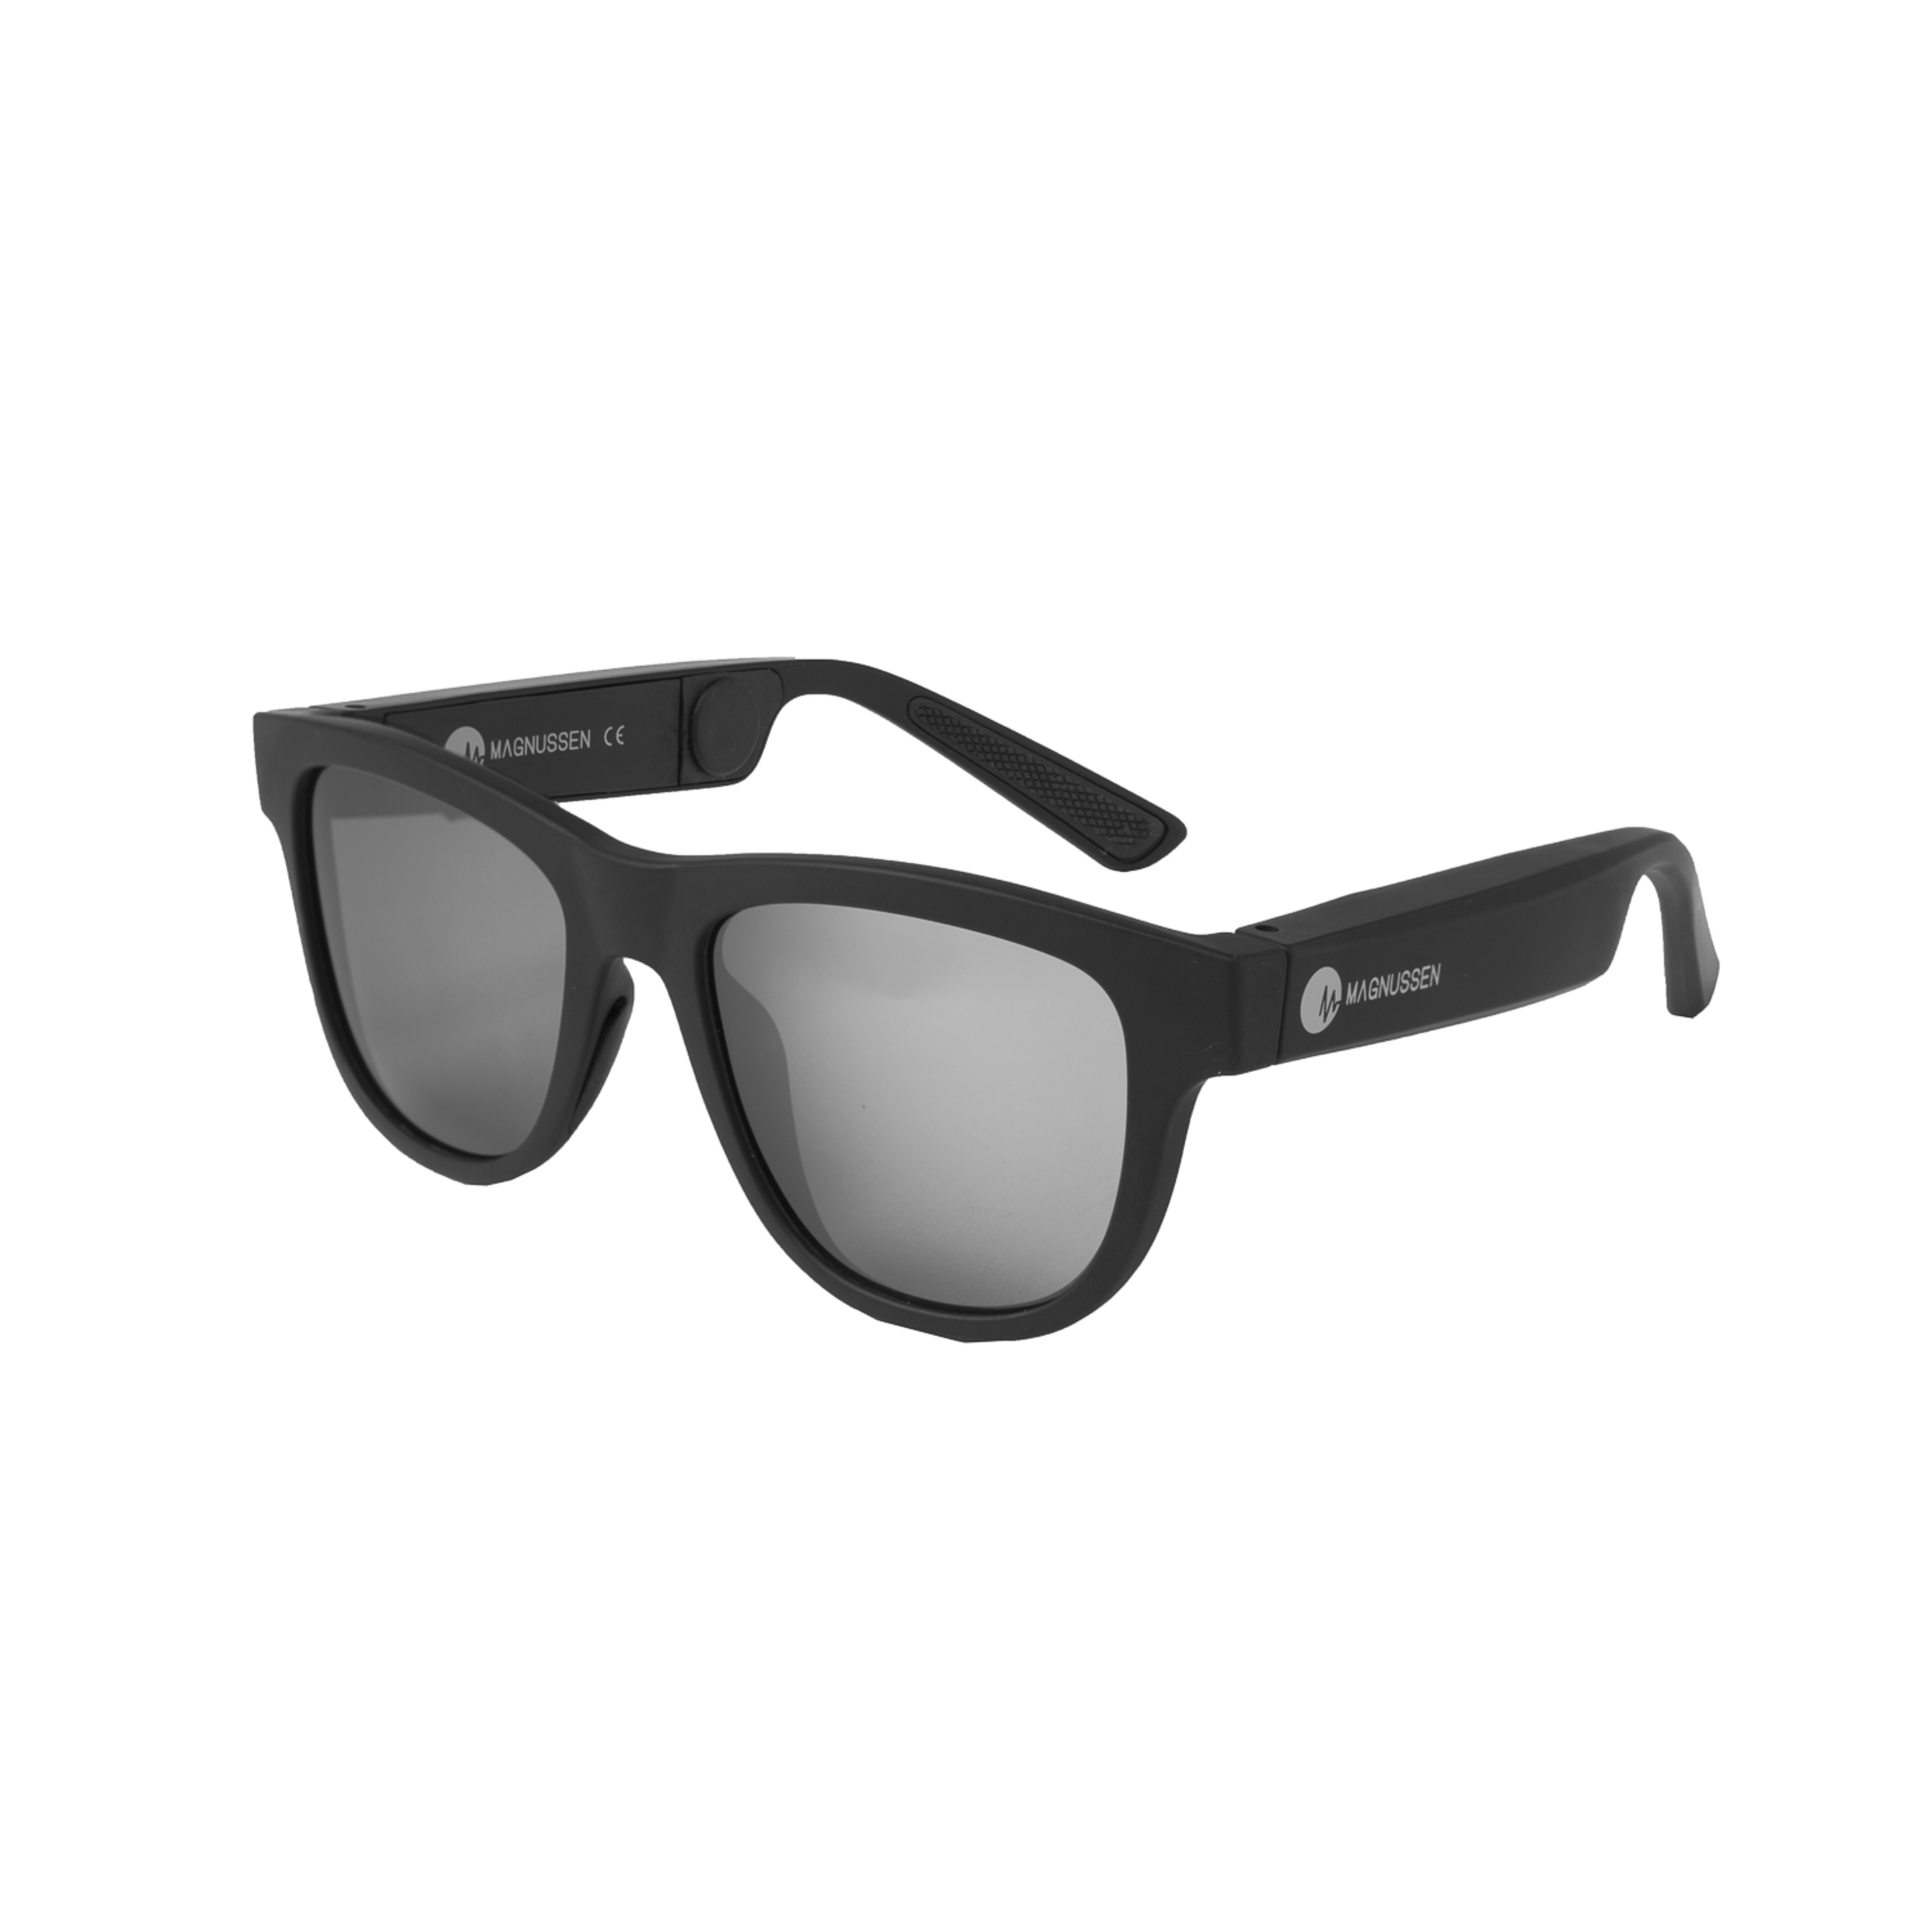 Gafas De Sol Magnussen G1 Bluetooth - Negro  MKP